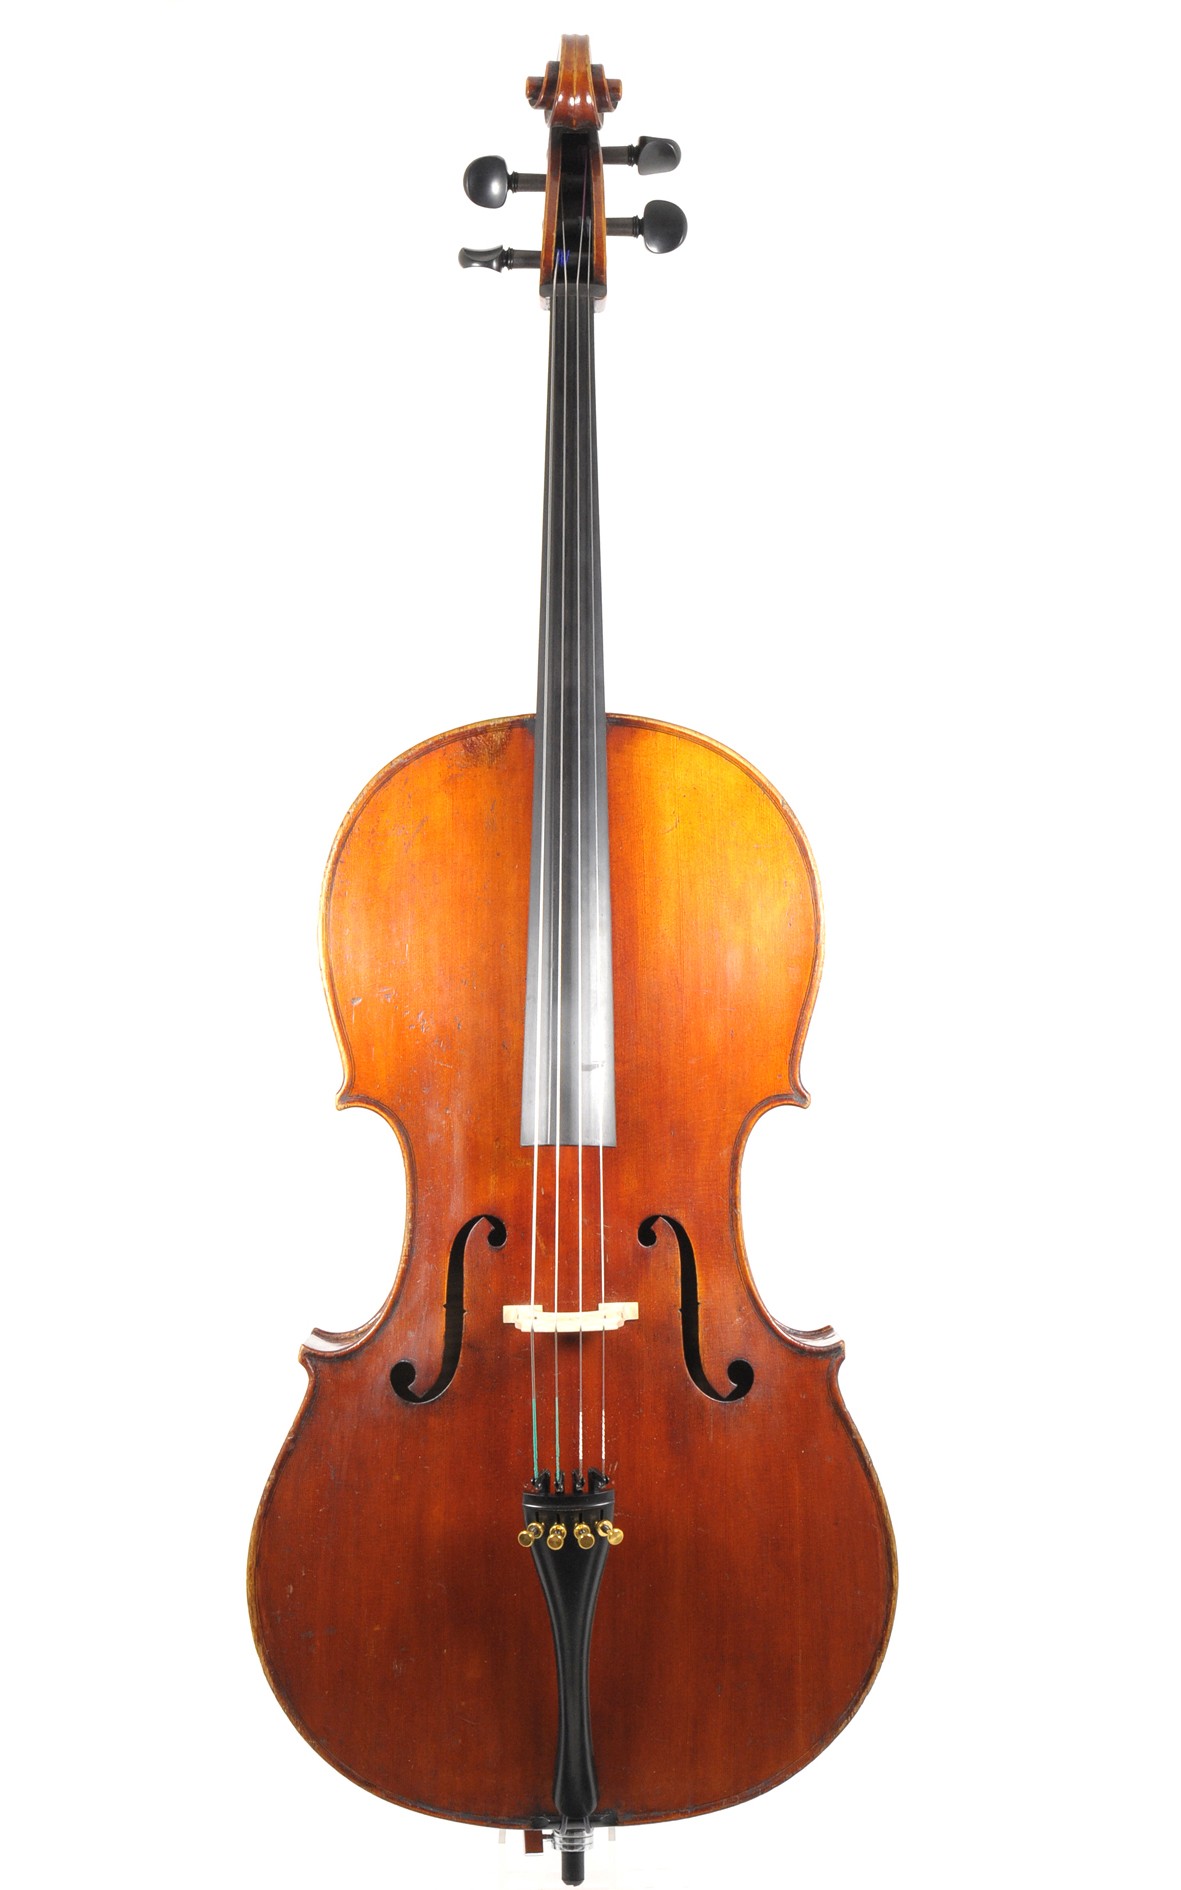 19th century cello from Markneukirchen